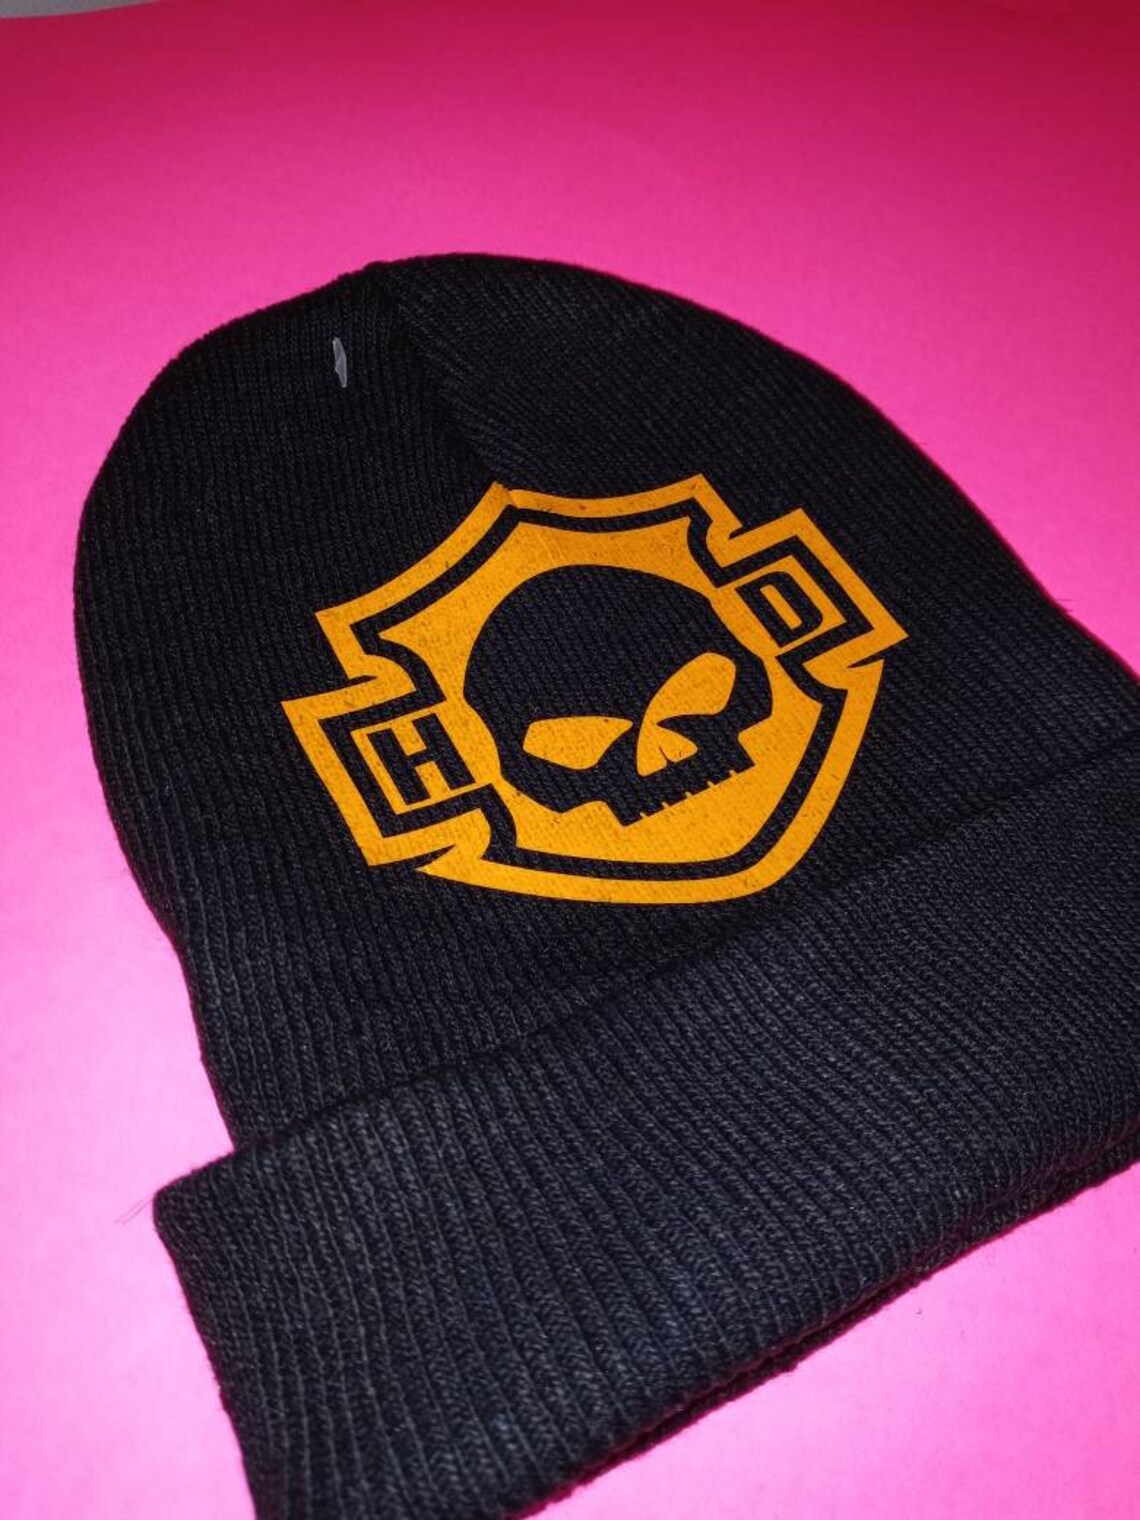 Harley Davidson Skull Cap cuffed winter hat | Etsy